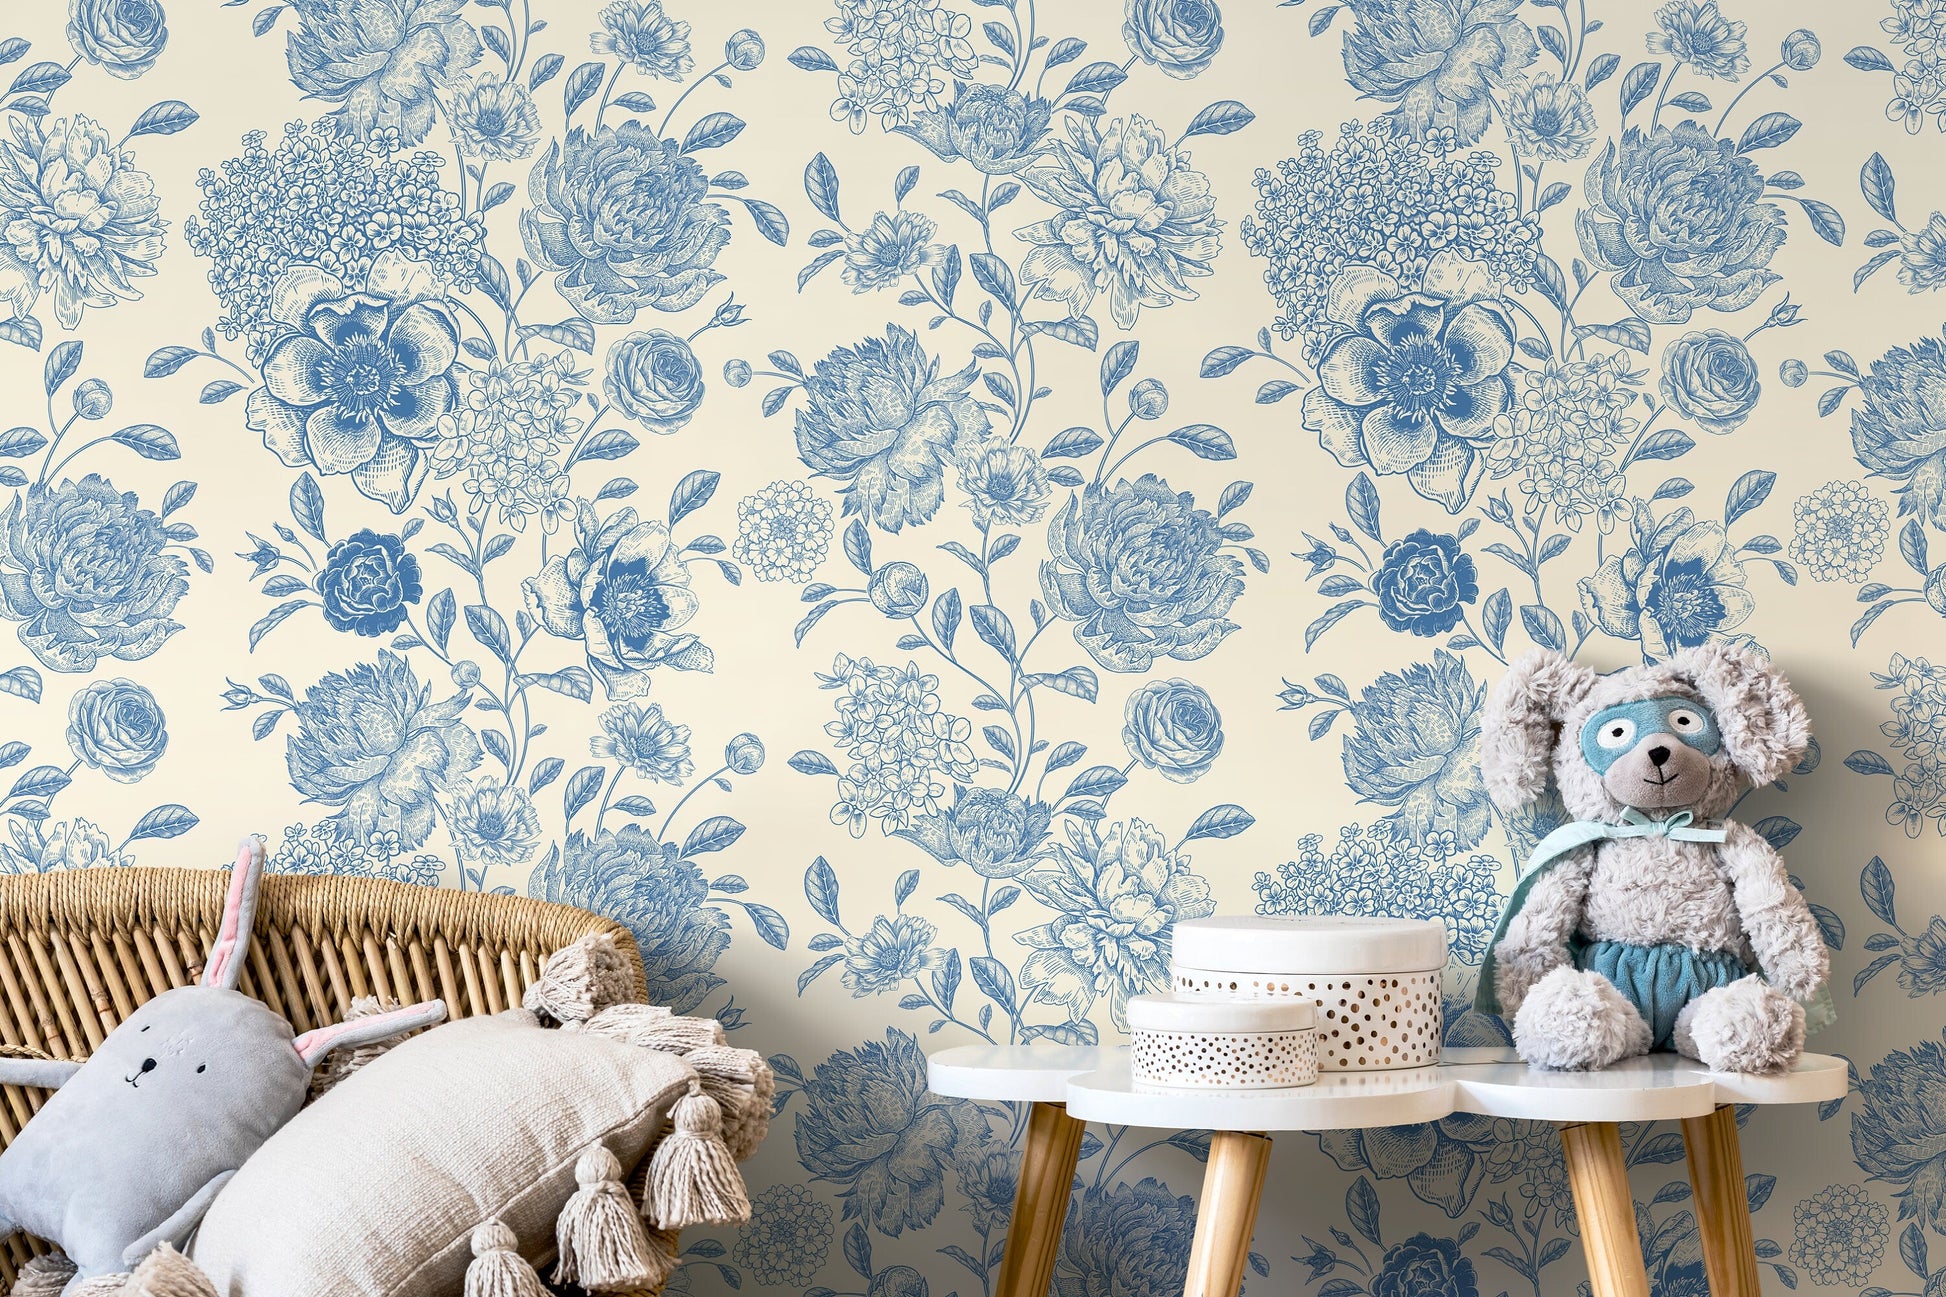 Blue Vintage Floral Wallpaper / Peel and Stick Wallpaper Removable Wallpaper Home Decor Wall Art Wall Decor Room Decor - D052